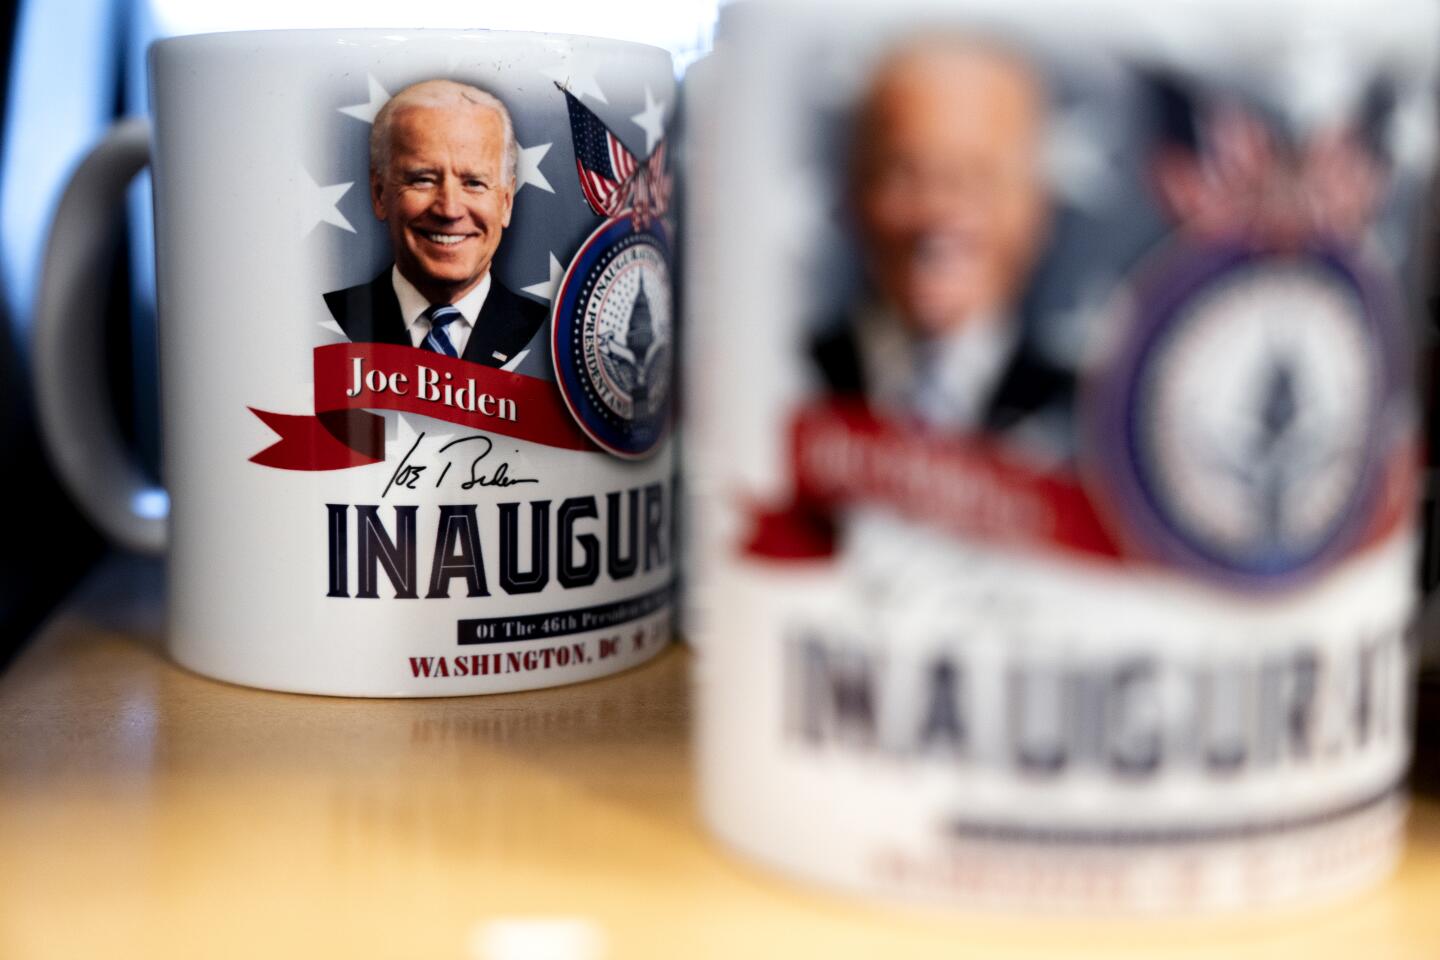 Biden-Harris Themed Merchandise On Sale Ahead Of Inauguration